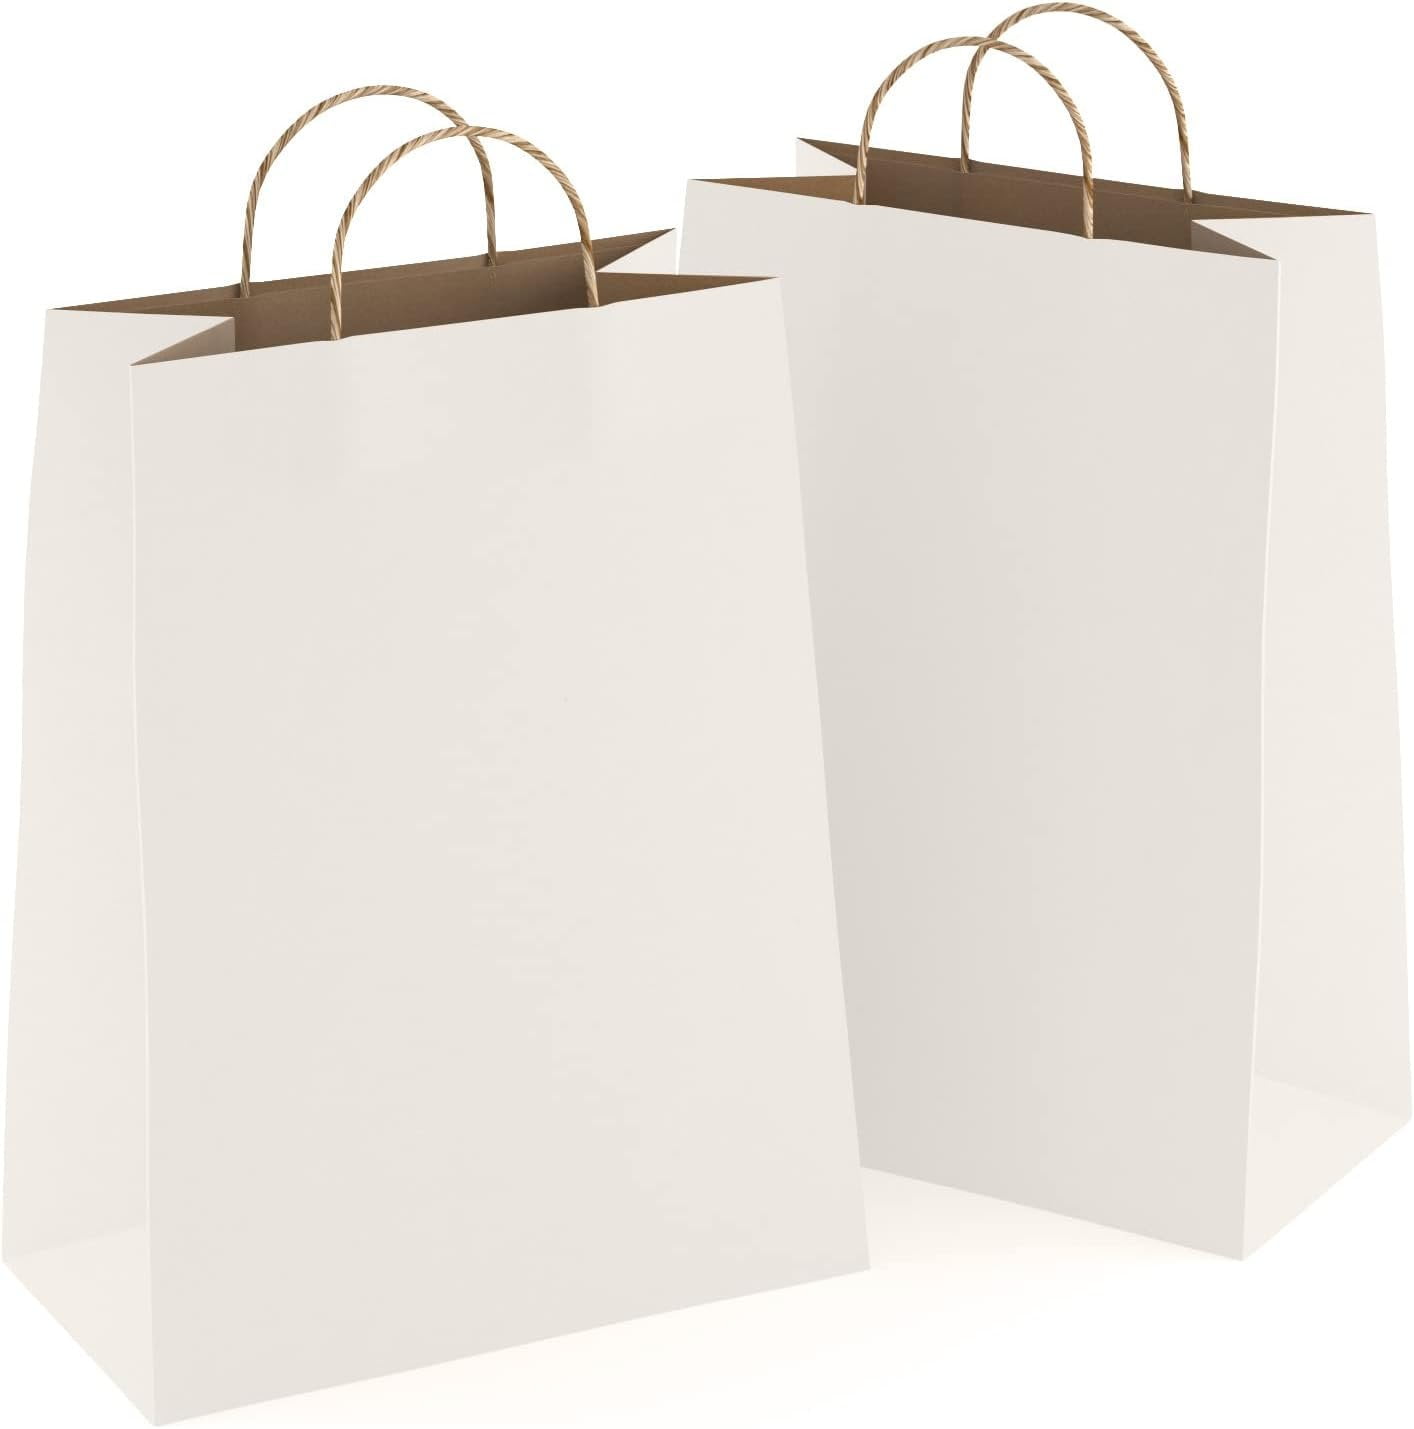 16 x 6 x 13 Wholesale Paper Bags - Brown Kraft (250) Plain